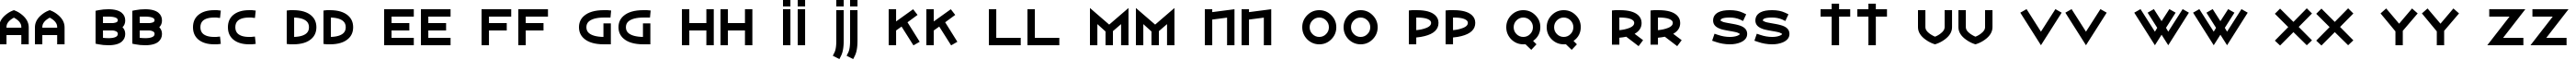 Пример написания английского алфавита шрифтом Watertown Black